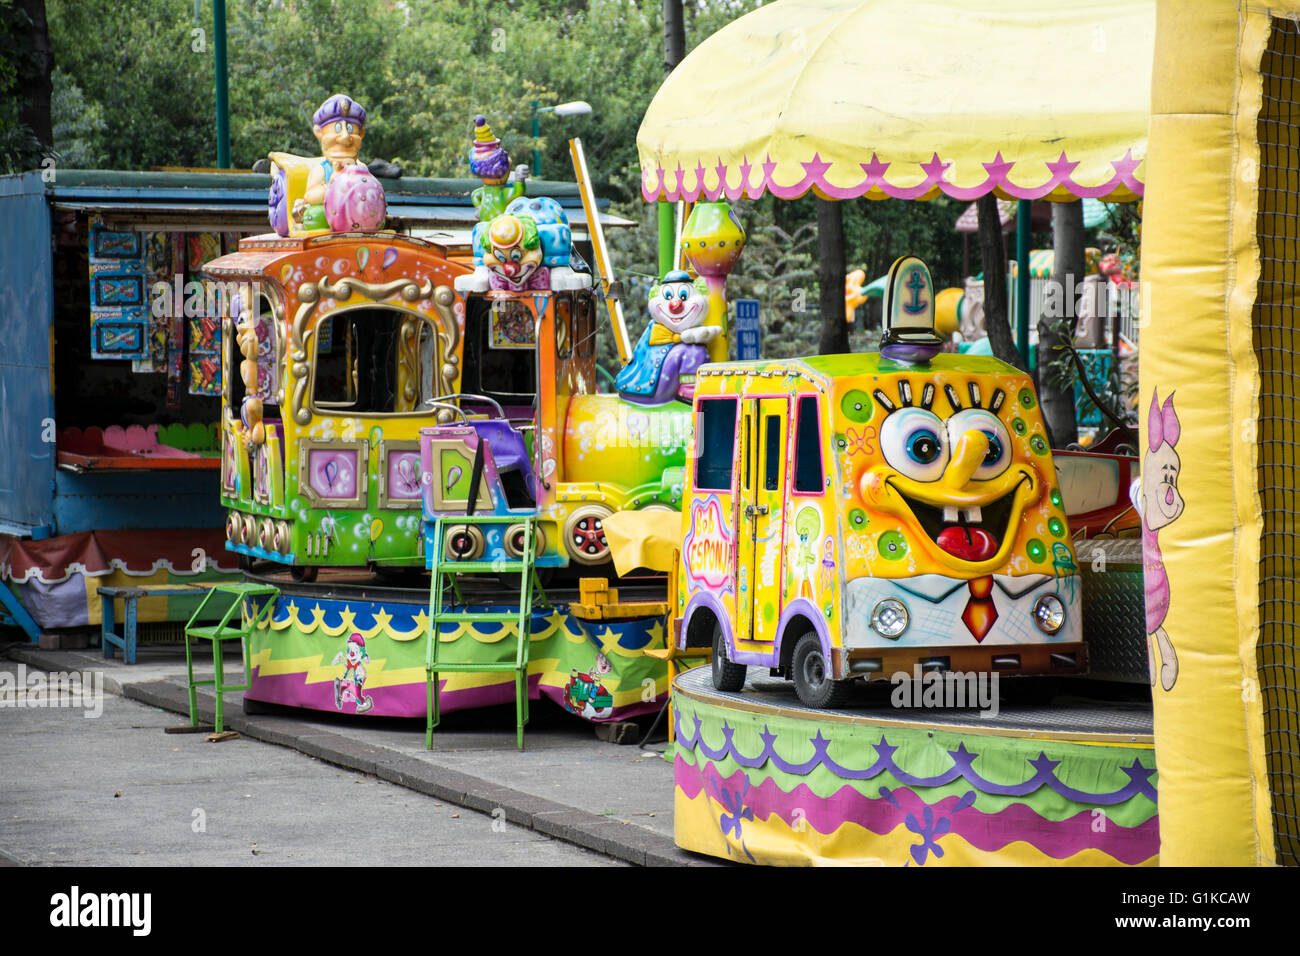 Sponge bob fair attraction on local park. Mexico City, Mexico. Stock Photo